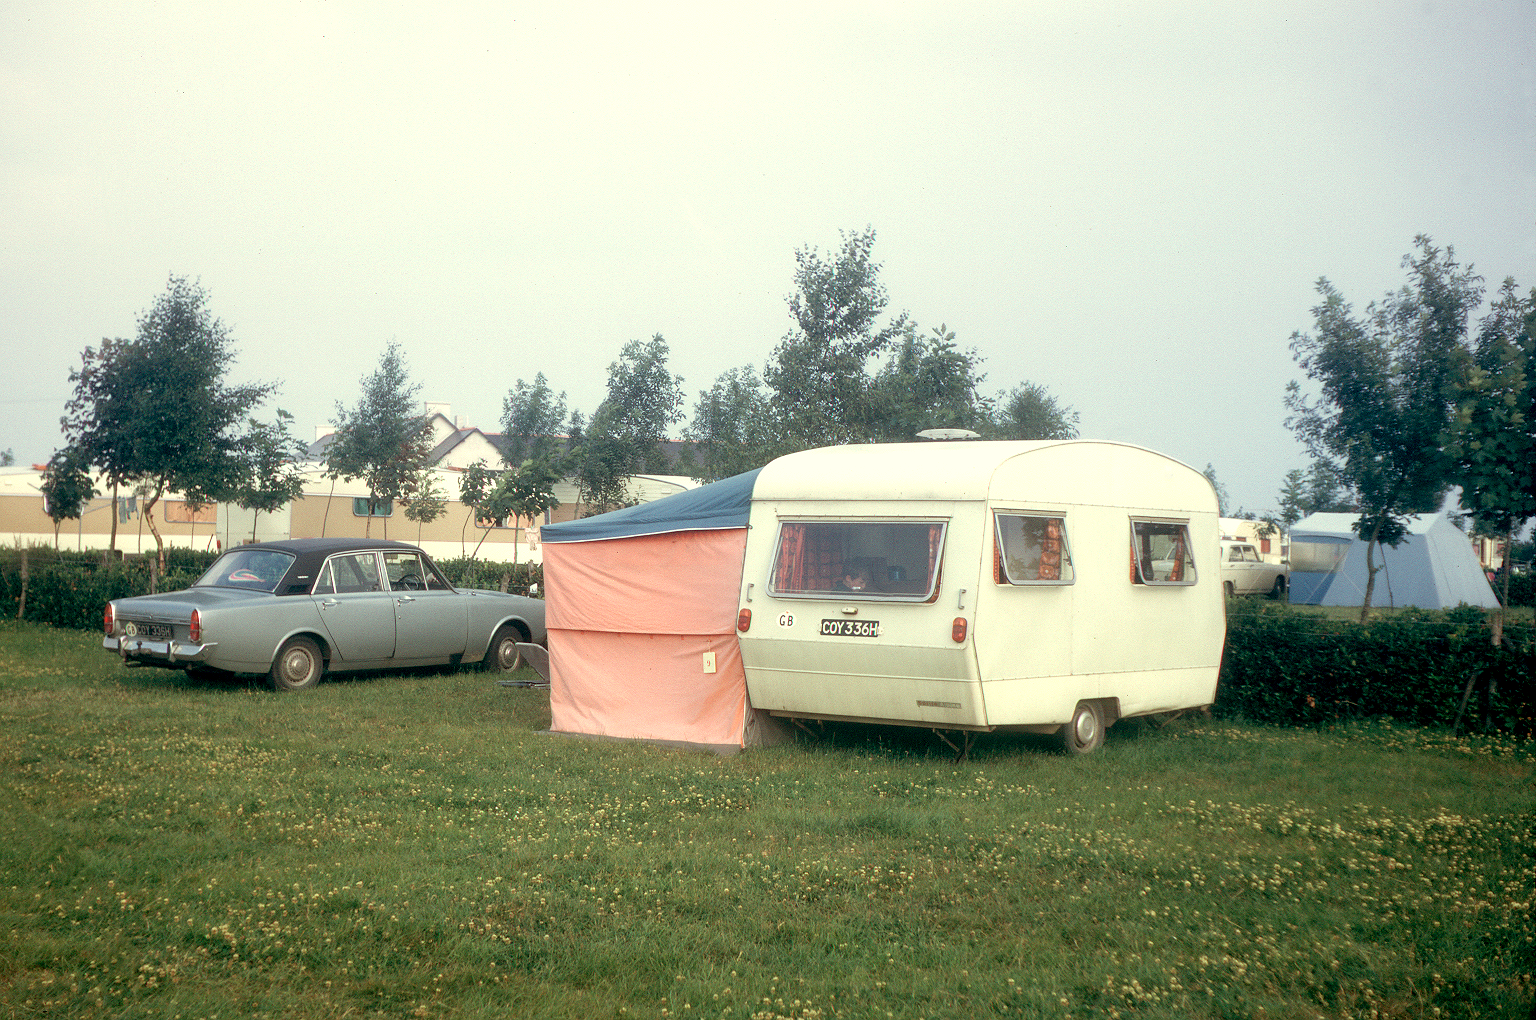 7102210k May 1971 - Caravan and car (Ford Corsair, COY 336H) at our campsite in Benodet.